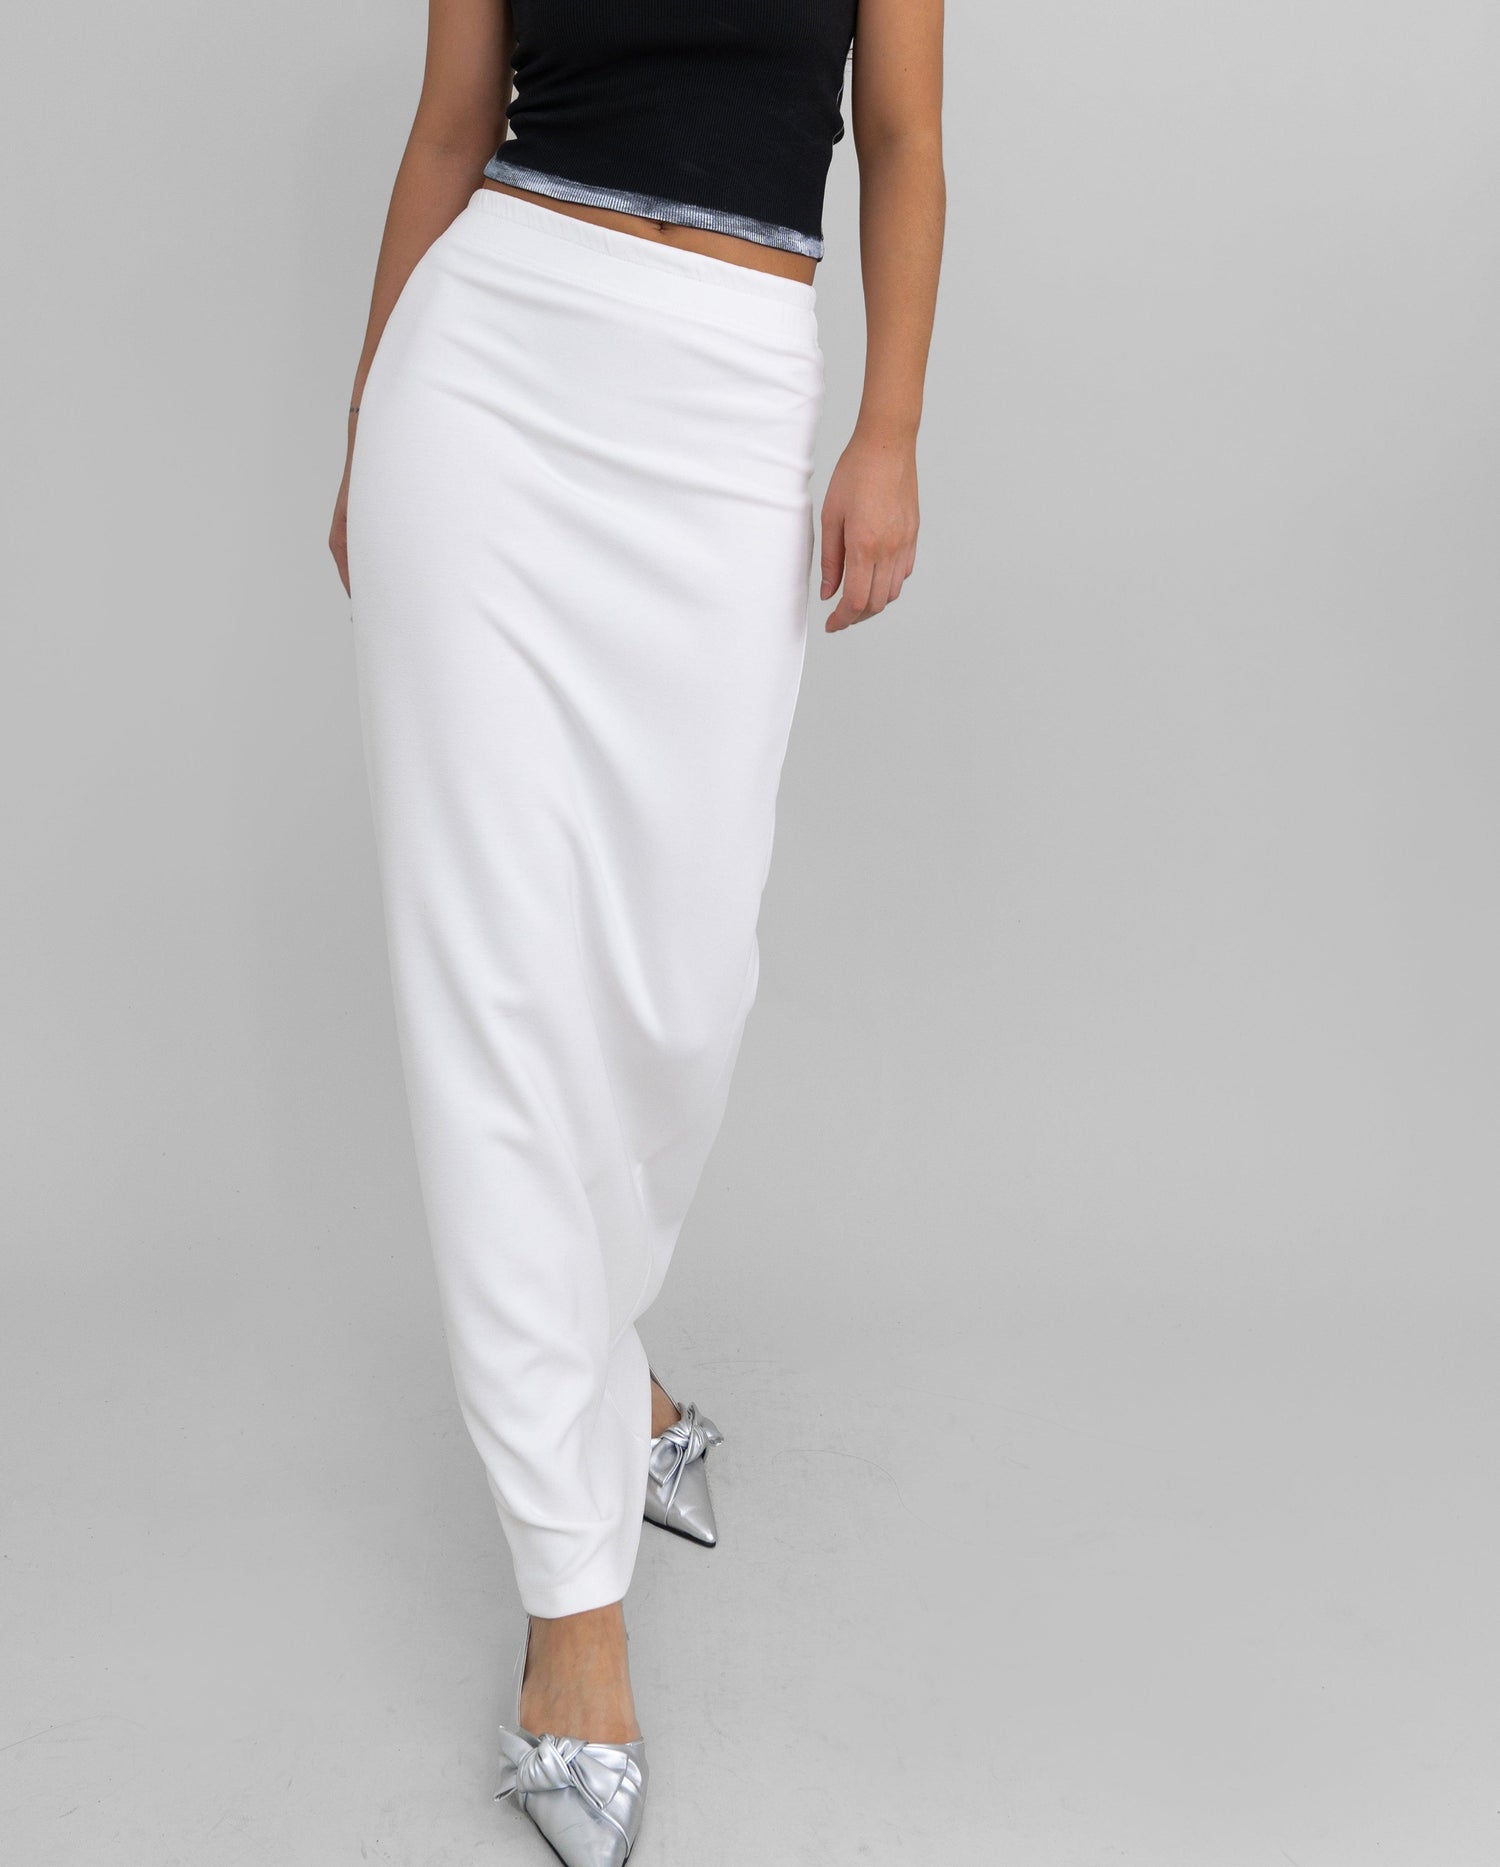 Jesse Fitted Tight Maxi Skirt / White - The Bekk